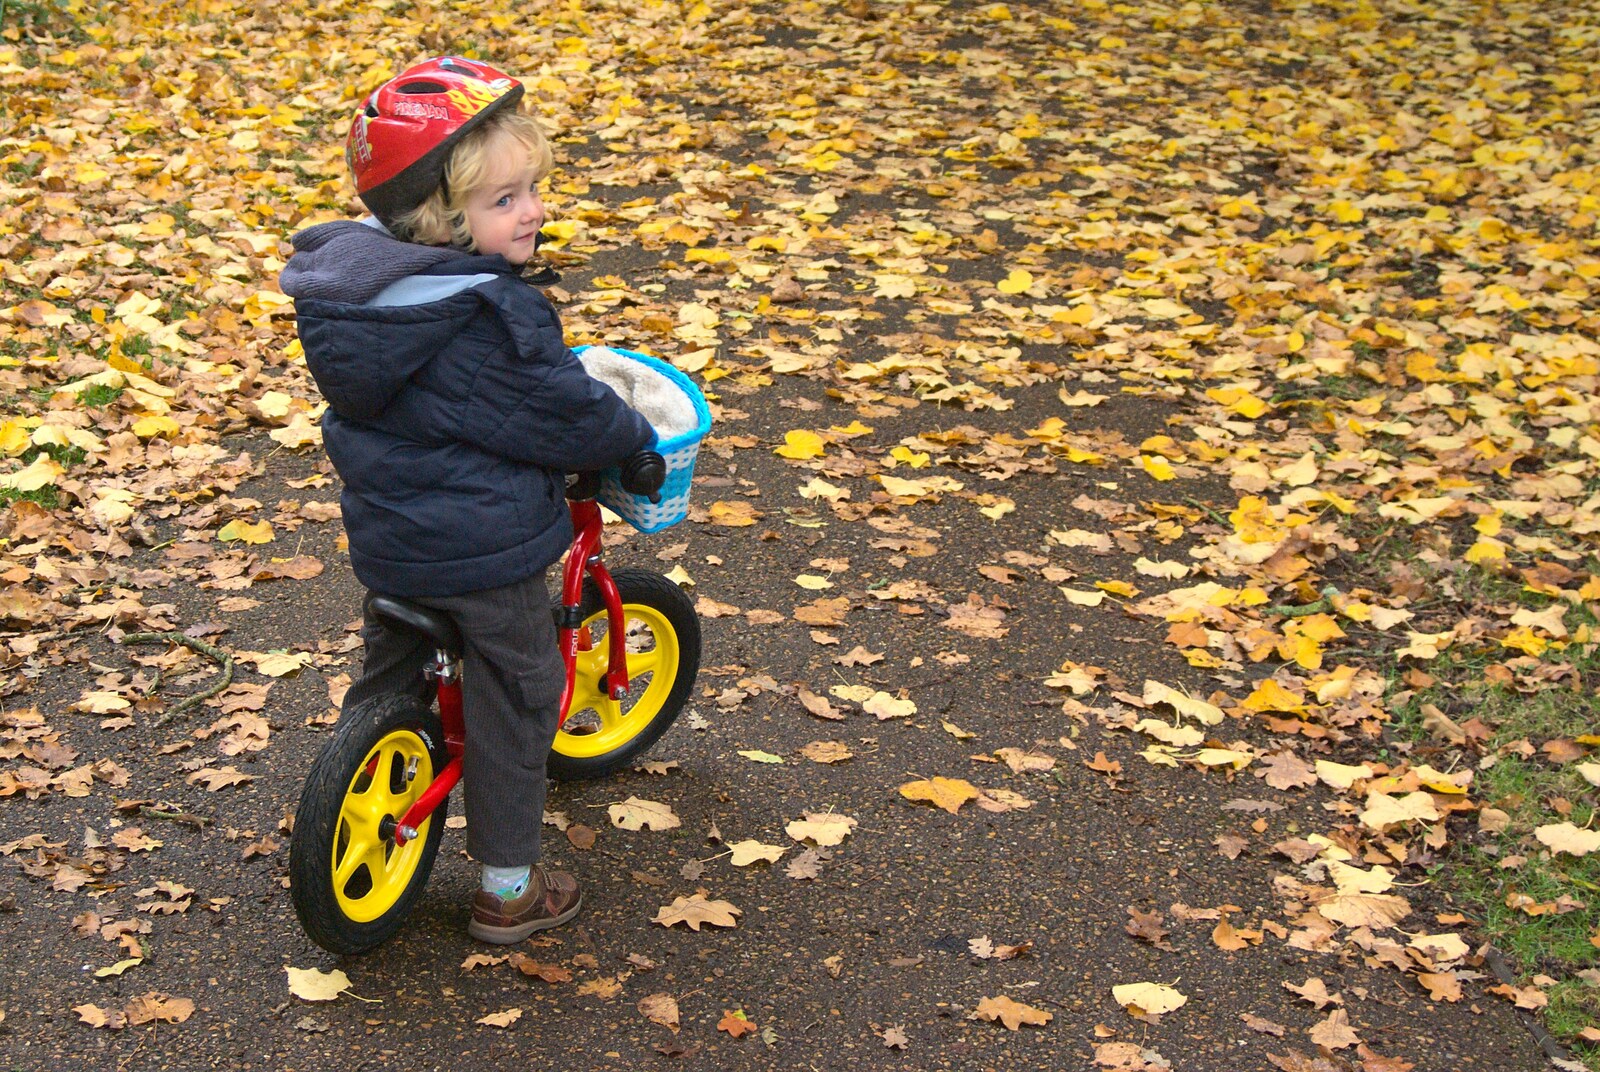 Fred pauses on his balance bike from Autumn in Thornham Estate, Thornham, Suffolk - 6th November 2011